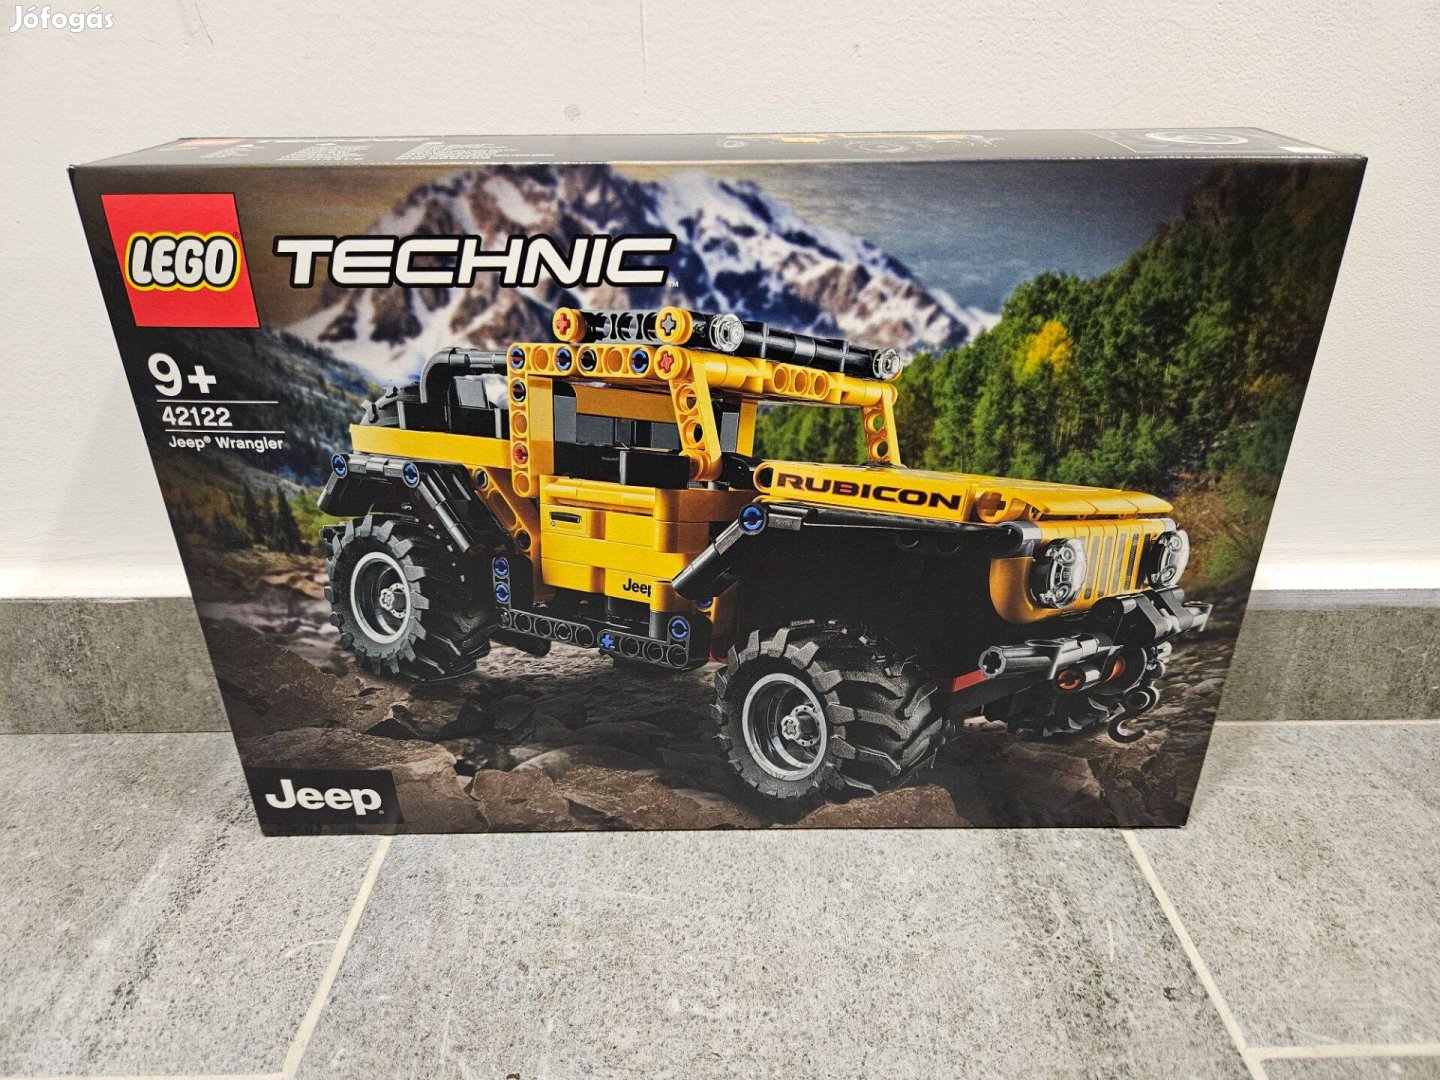 LEGO Technic - Jeep Wrangler 42122 új, bontatlan